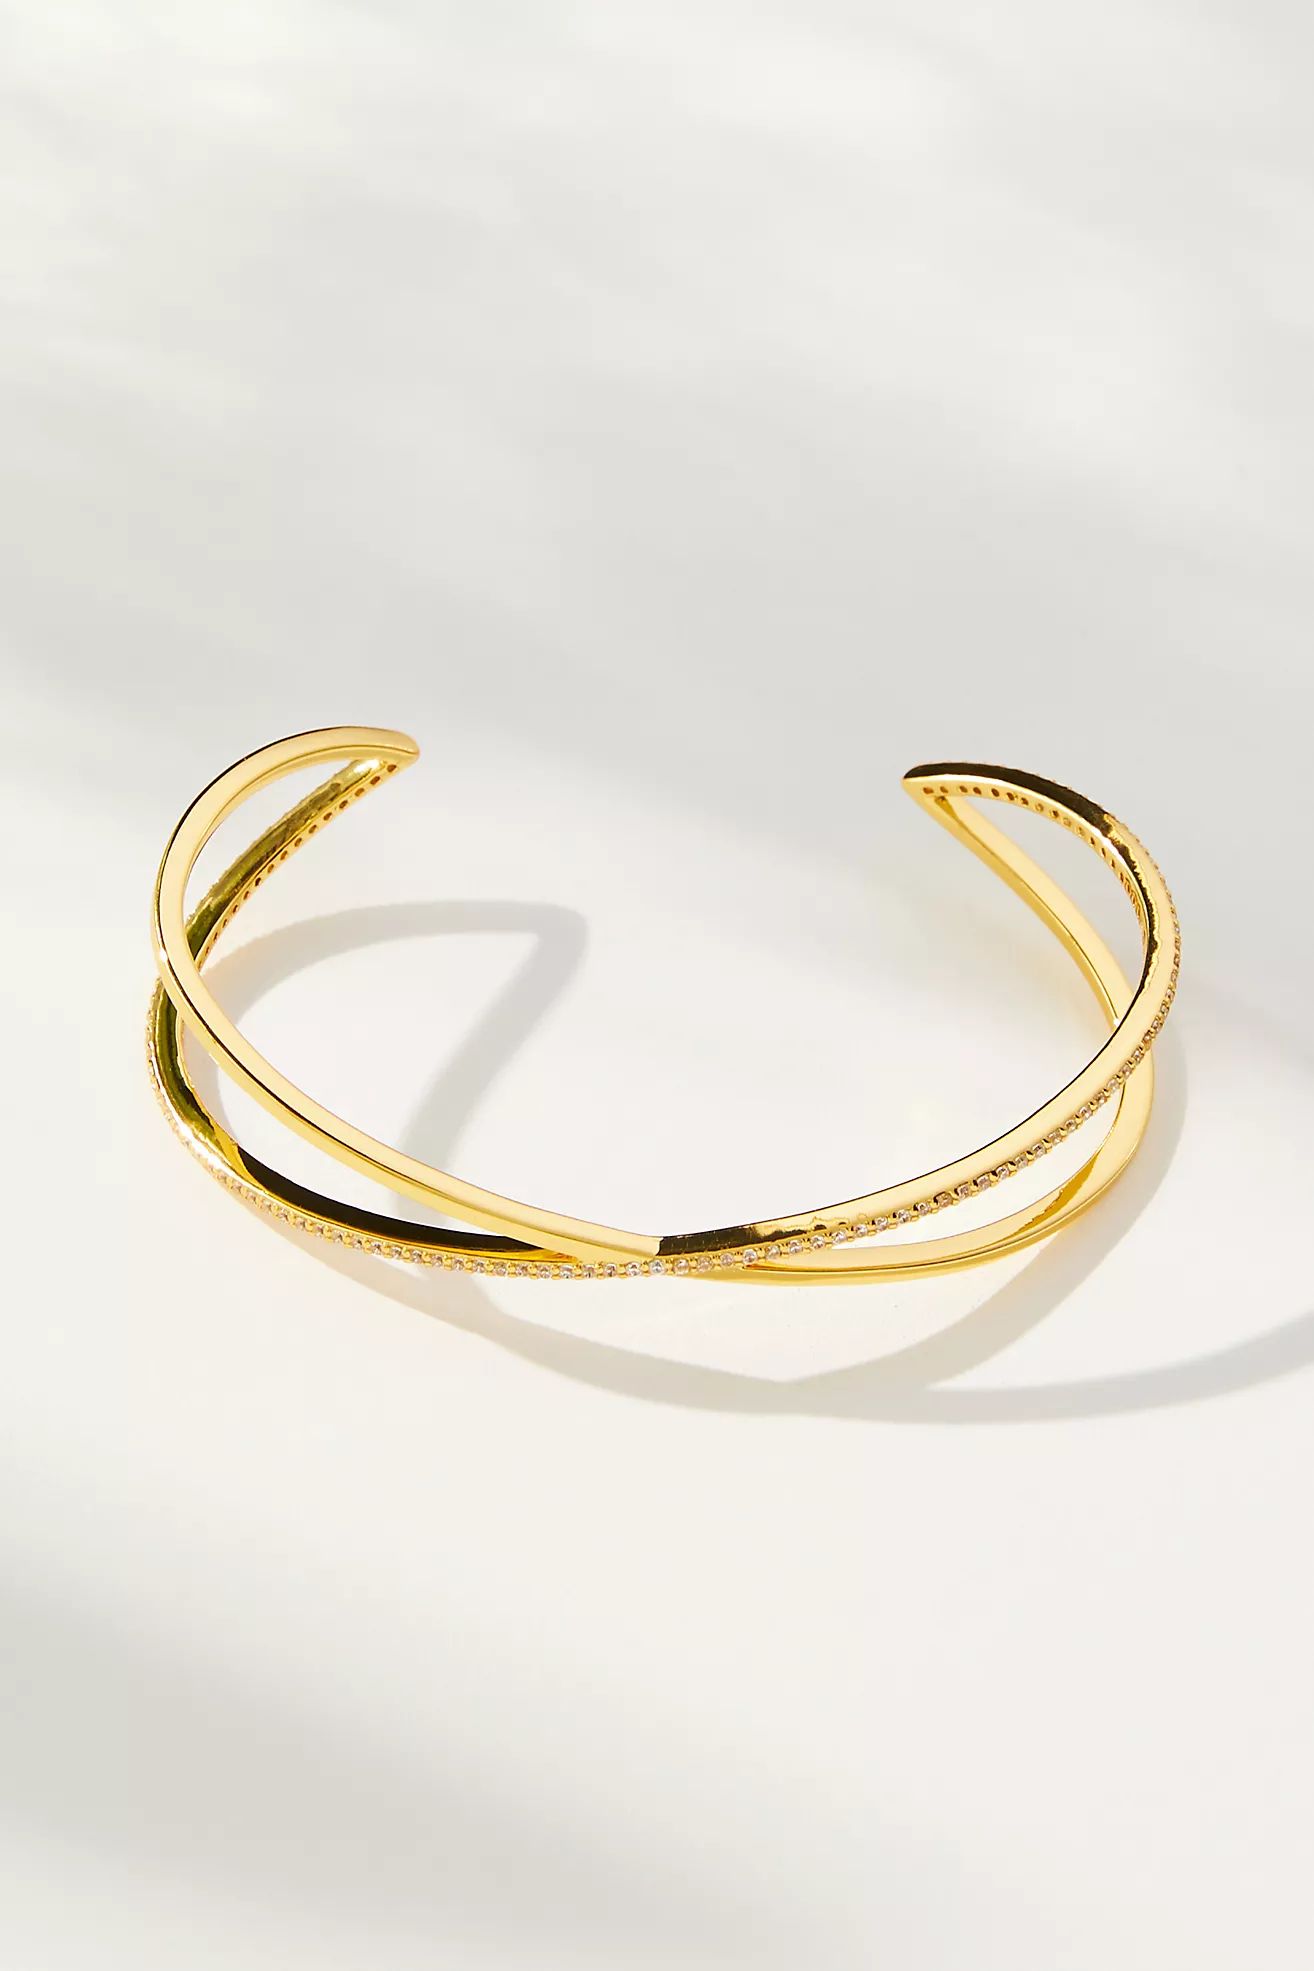 BaubleBar Shayla 18k Gold Cuff Bracelet | Anthropologie (US)